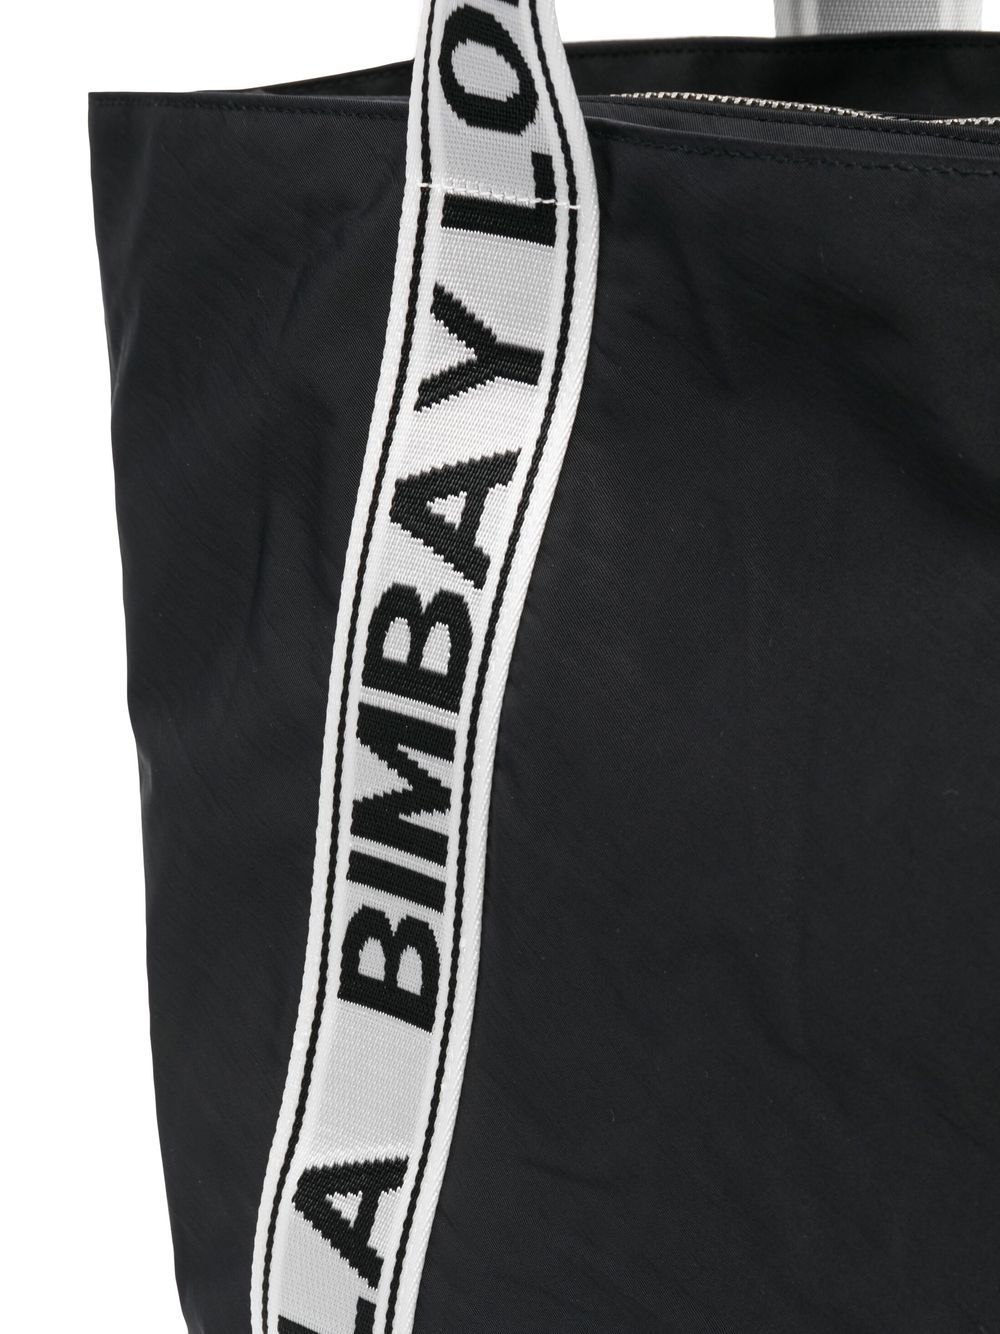 Bimba y Lola logo-lettering tote bag, Blue